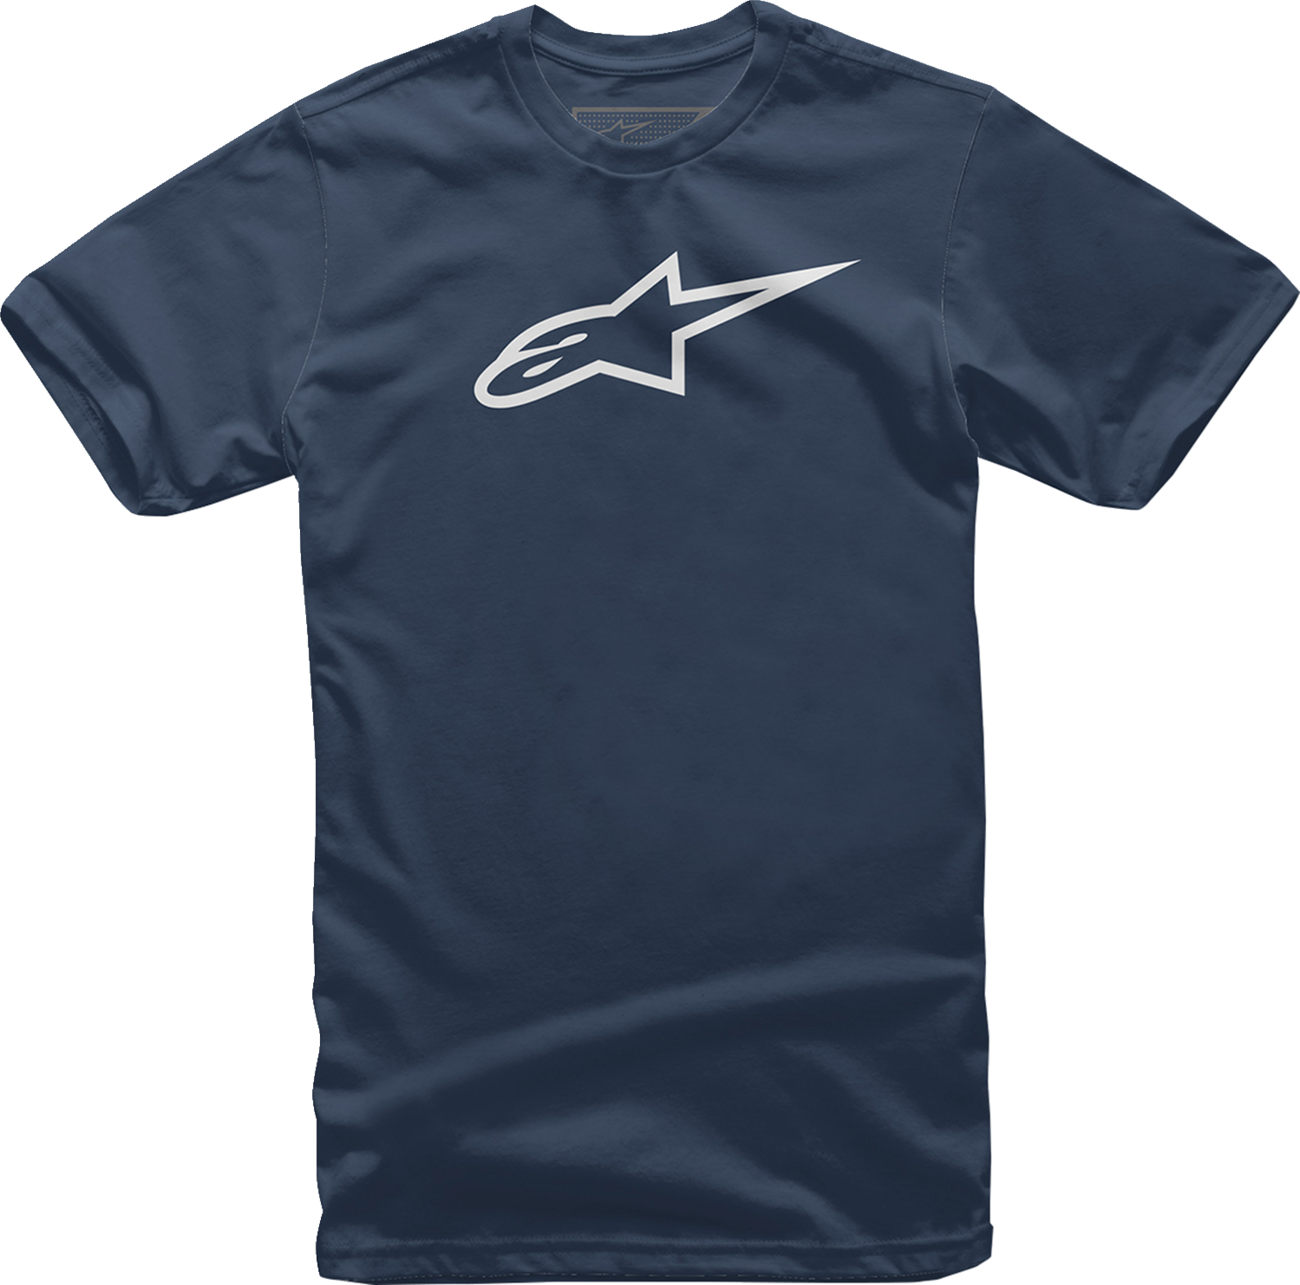 Camiseta ALPINESTARS Ageless - Azul marino/Blanco - Grande 1032720307020L